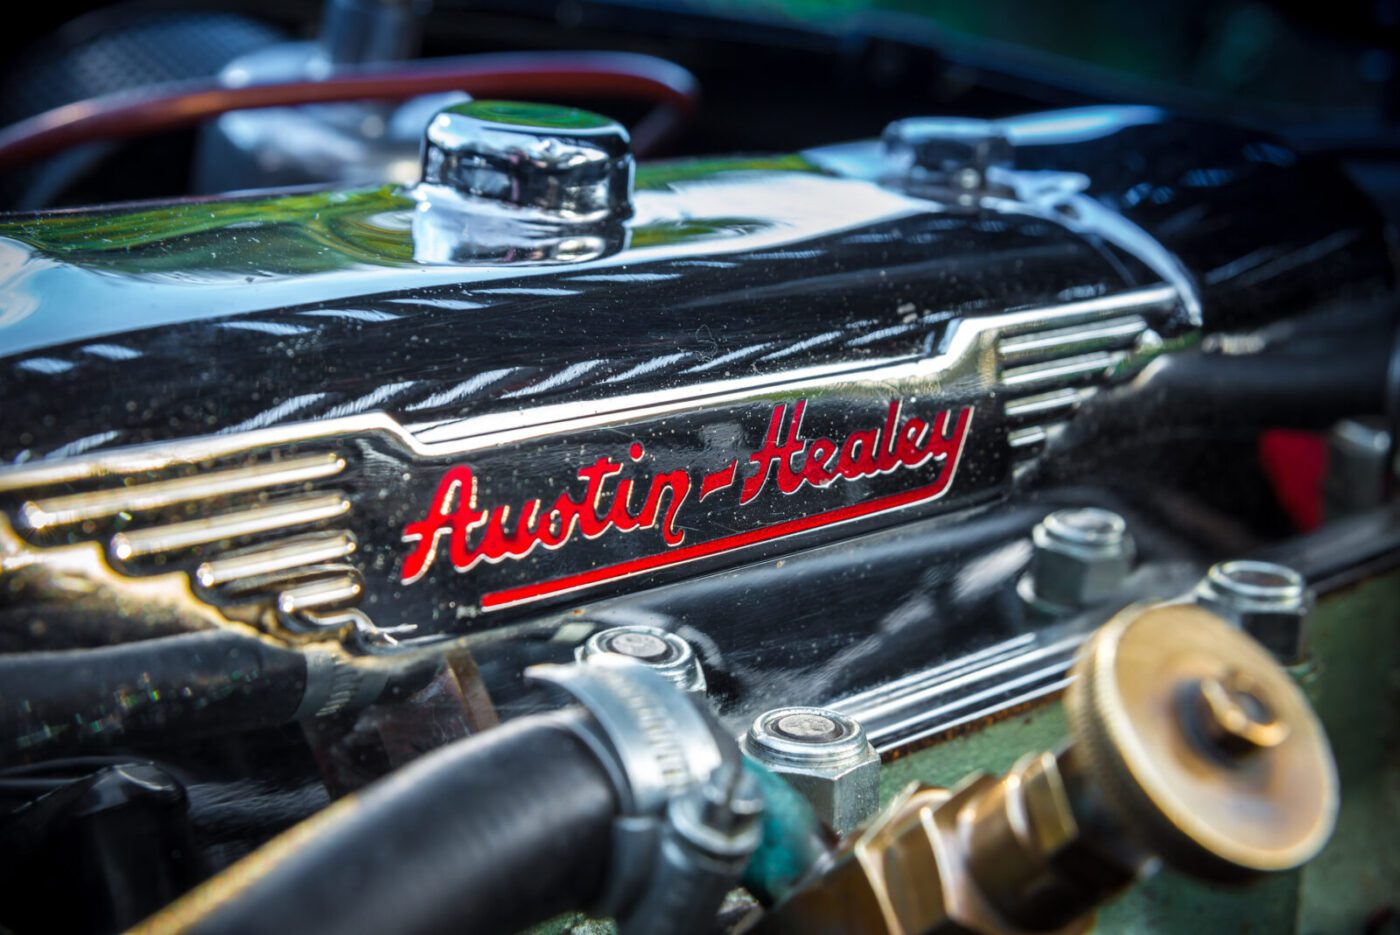 Austin-Healey 100 engine